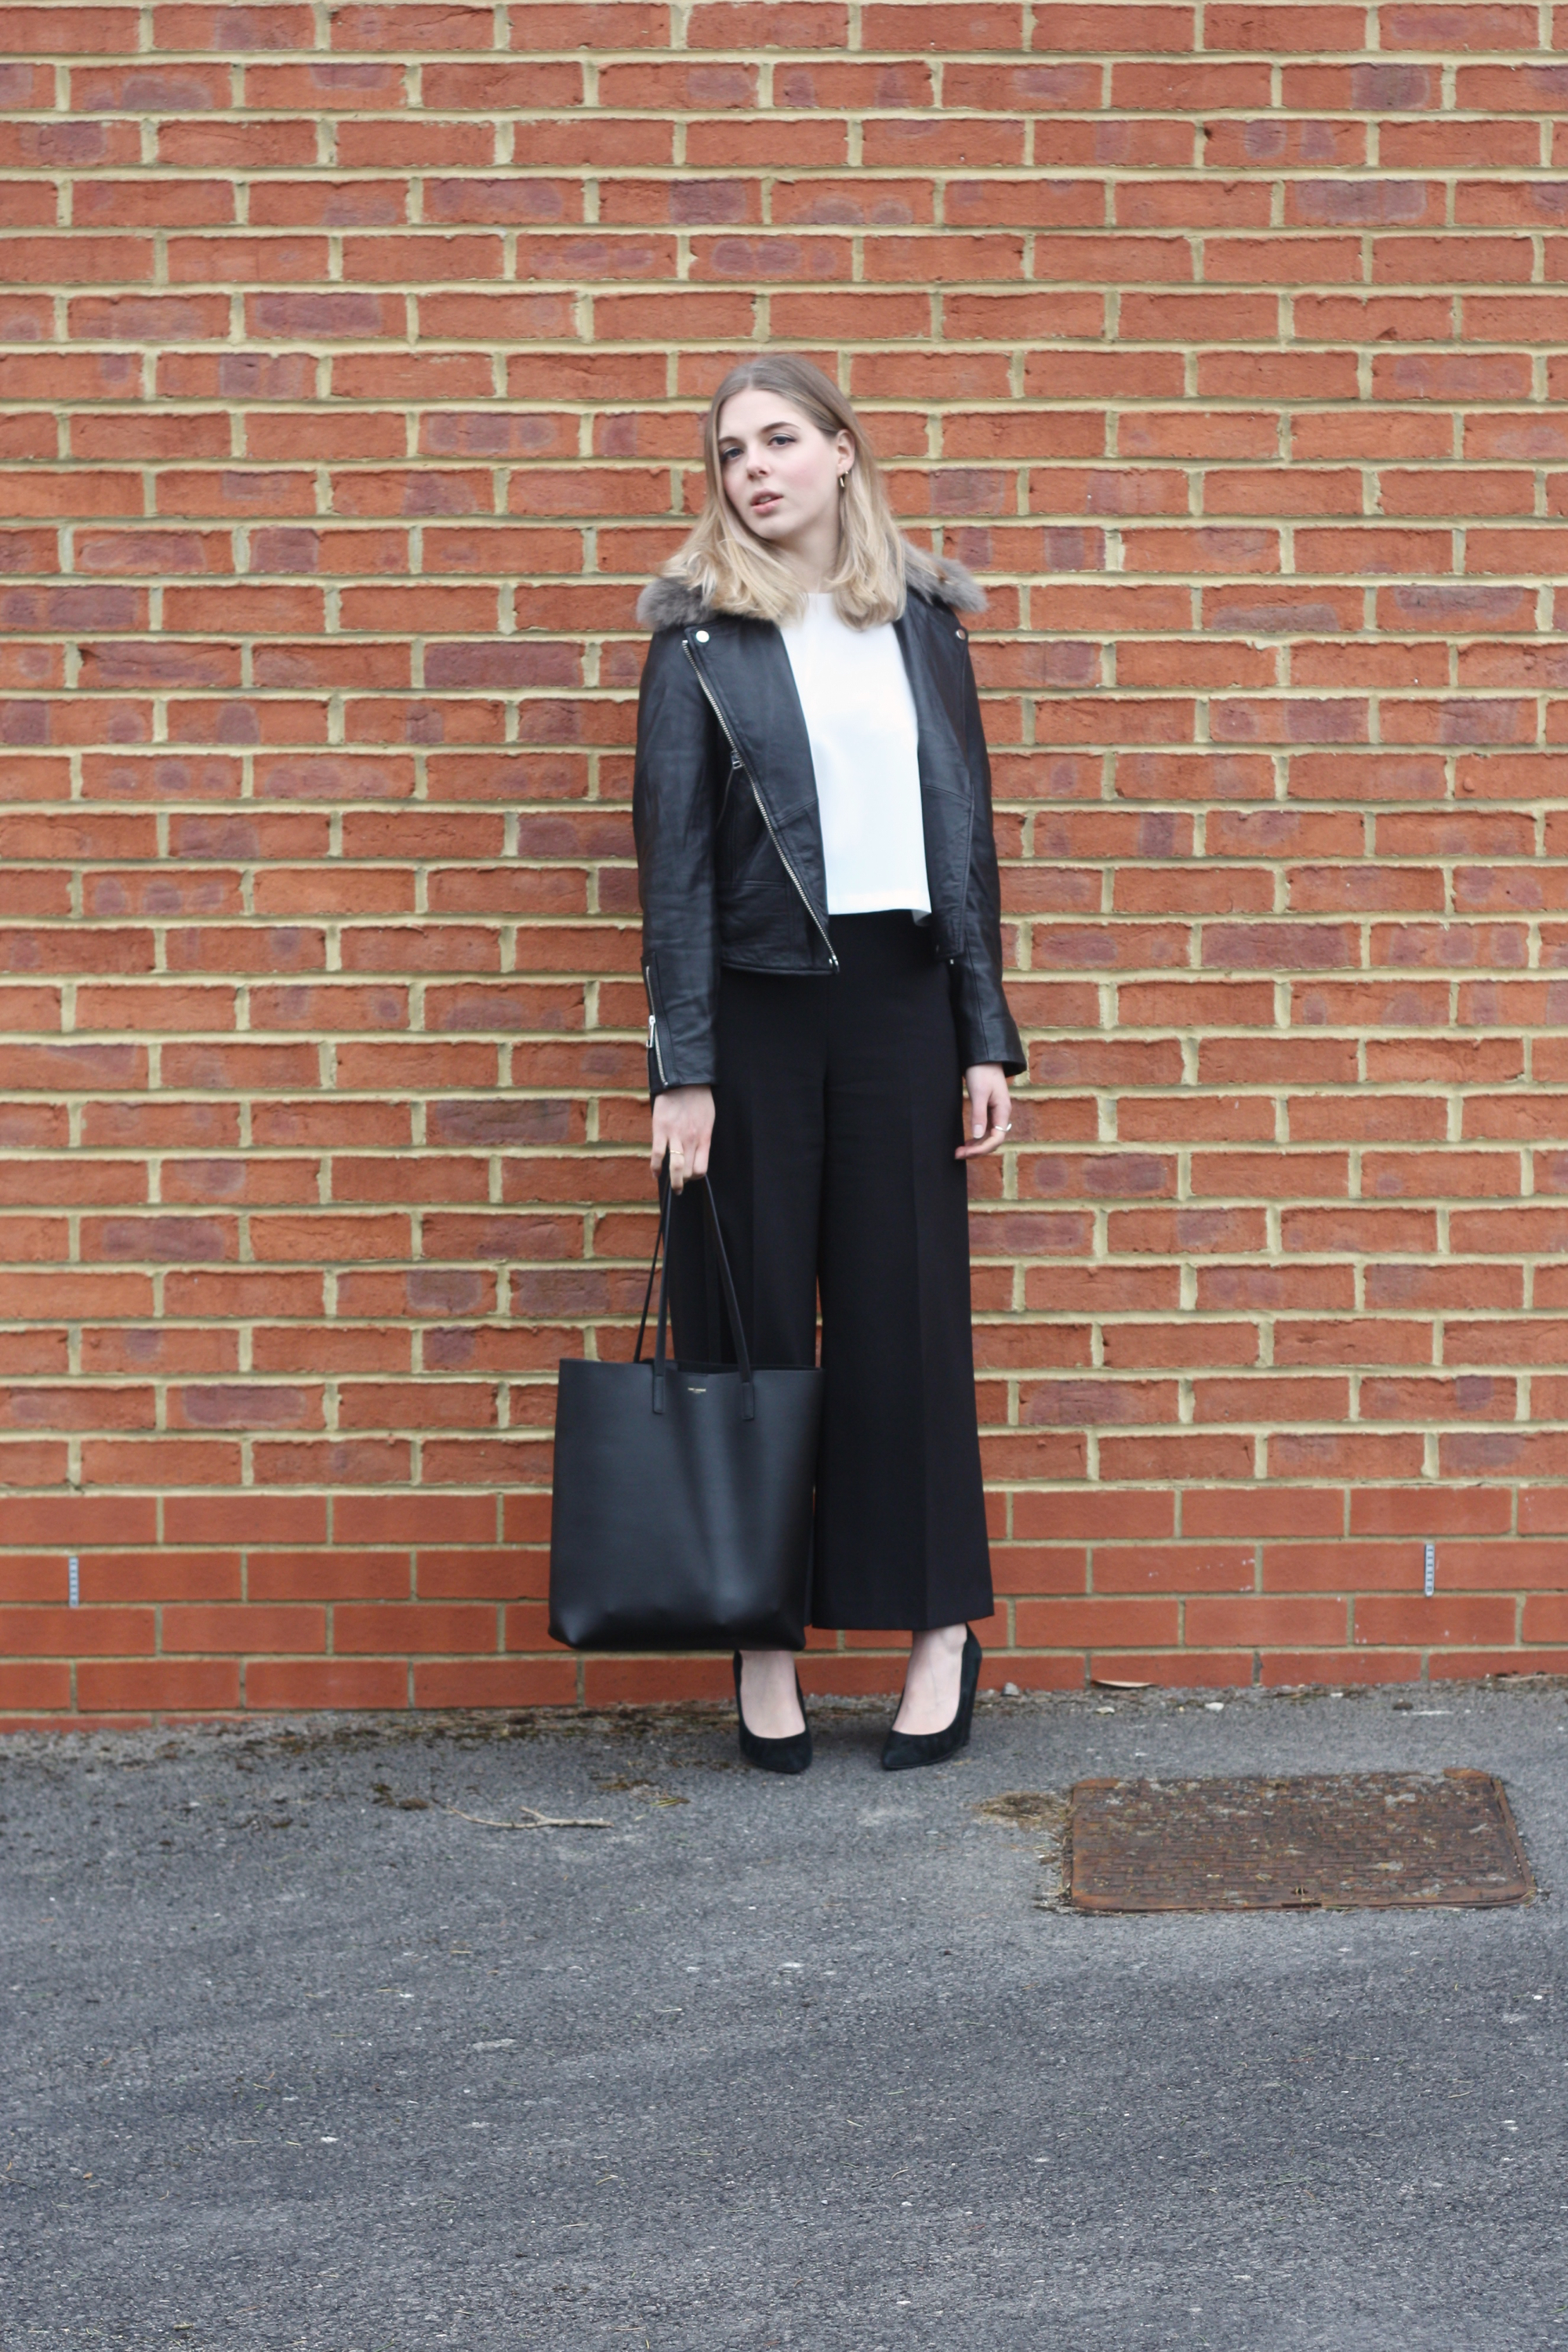 Zara cream cropped top, Whistles black heels and Saint Laurent black tote